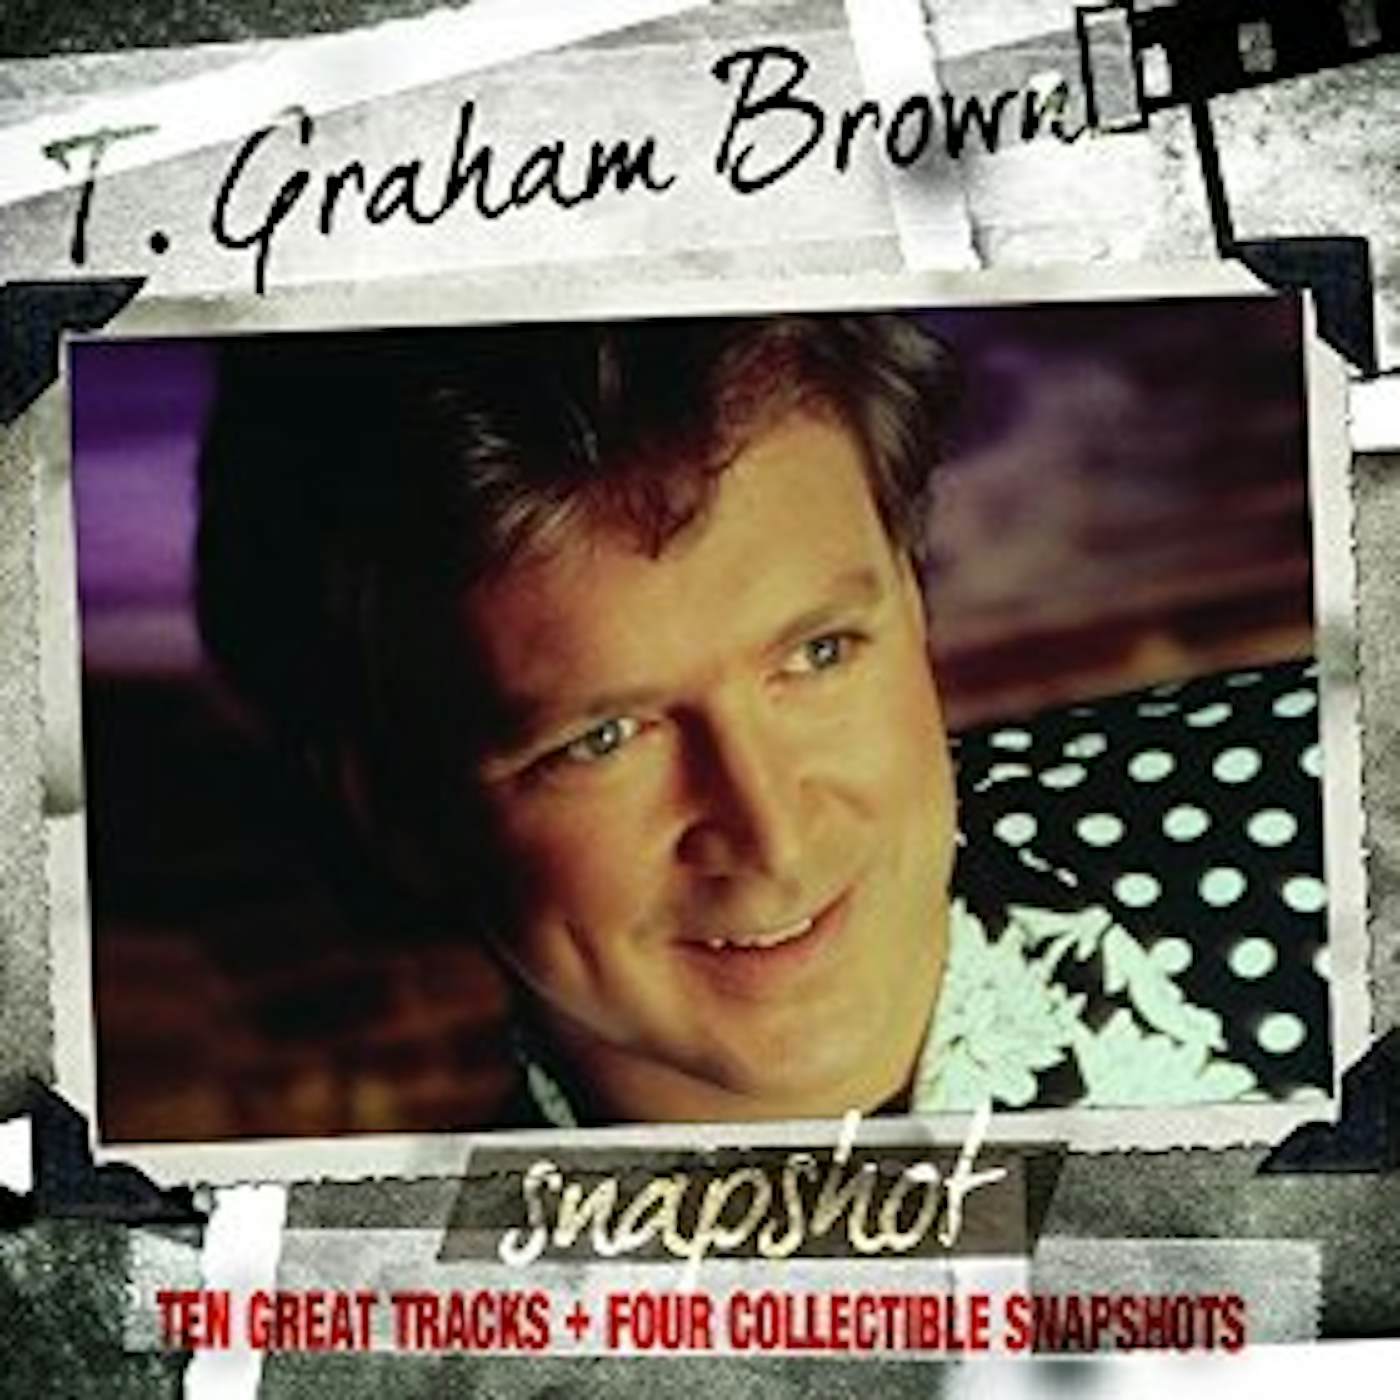 T. Graham Brown SNAPSHOT: T.GRAHAM BROWN CD